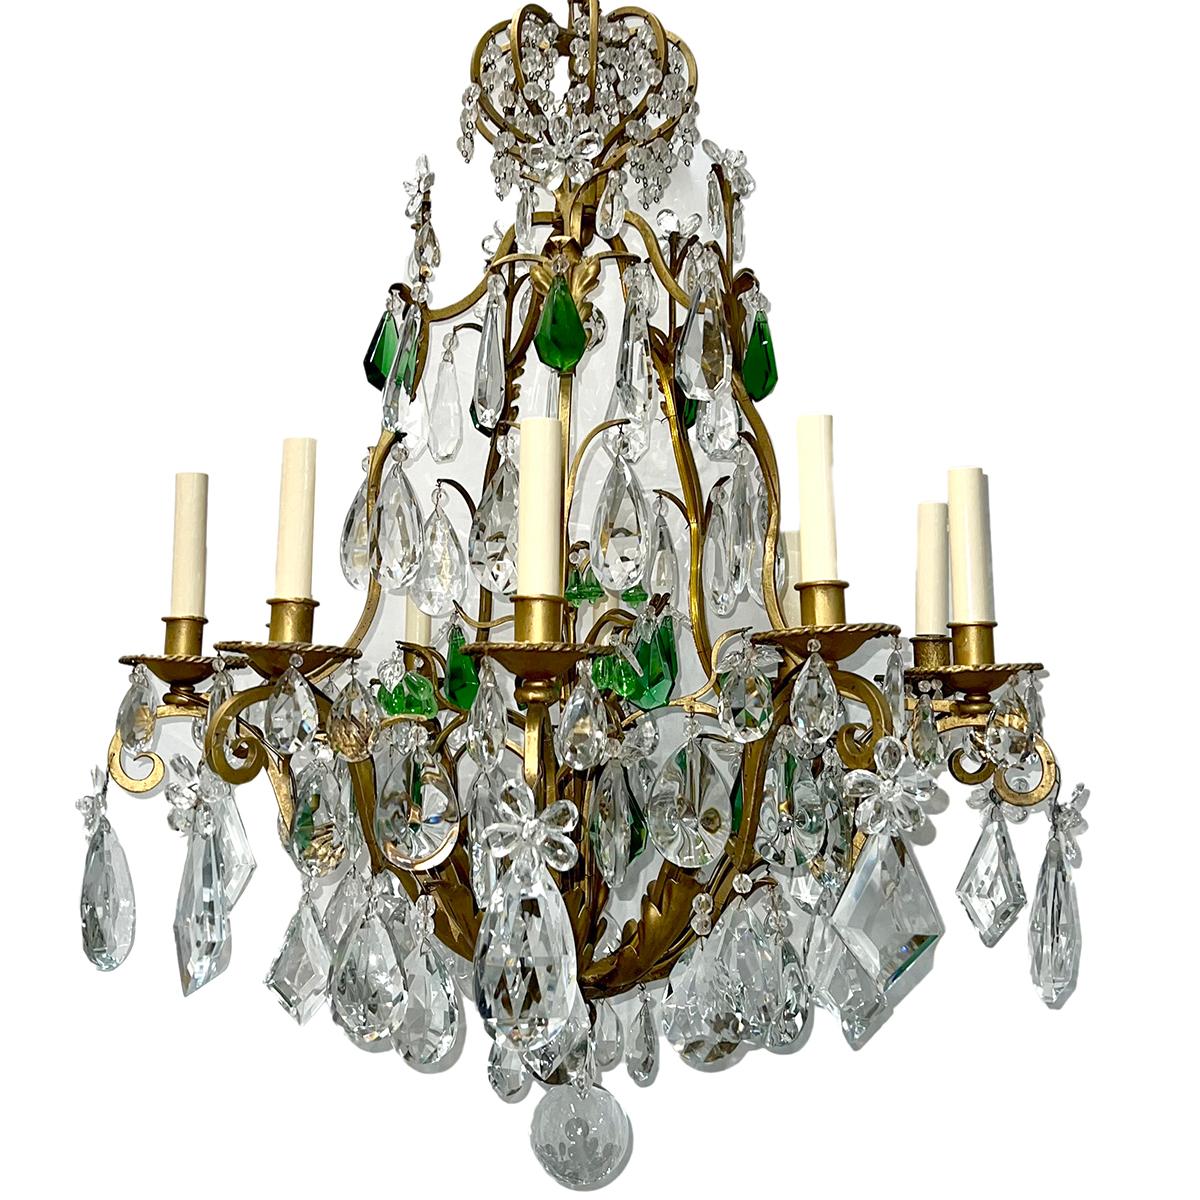 A circa 1920's gilt metal ten-arm chandelier with emerald green crystals.

Measurements:
Diameter: 26